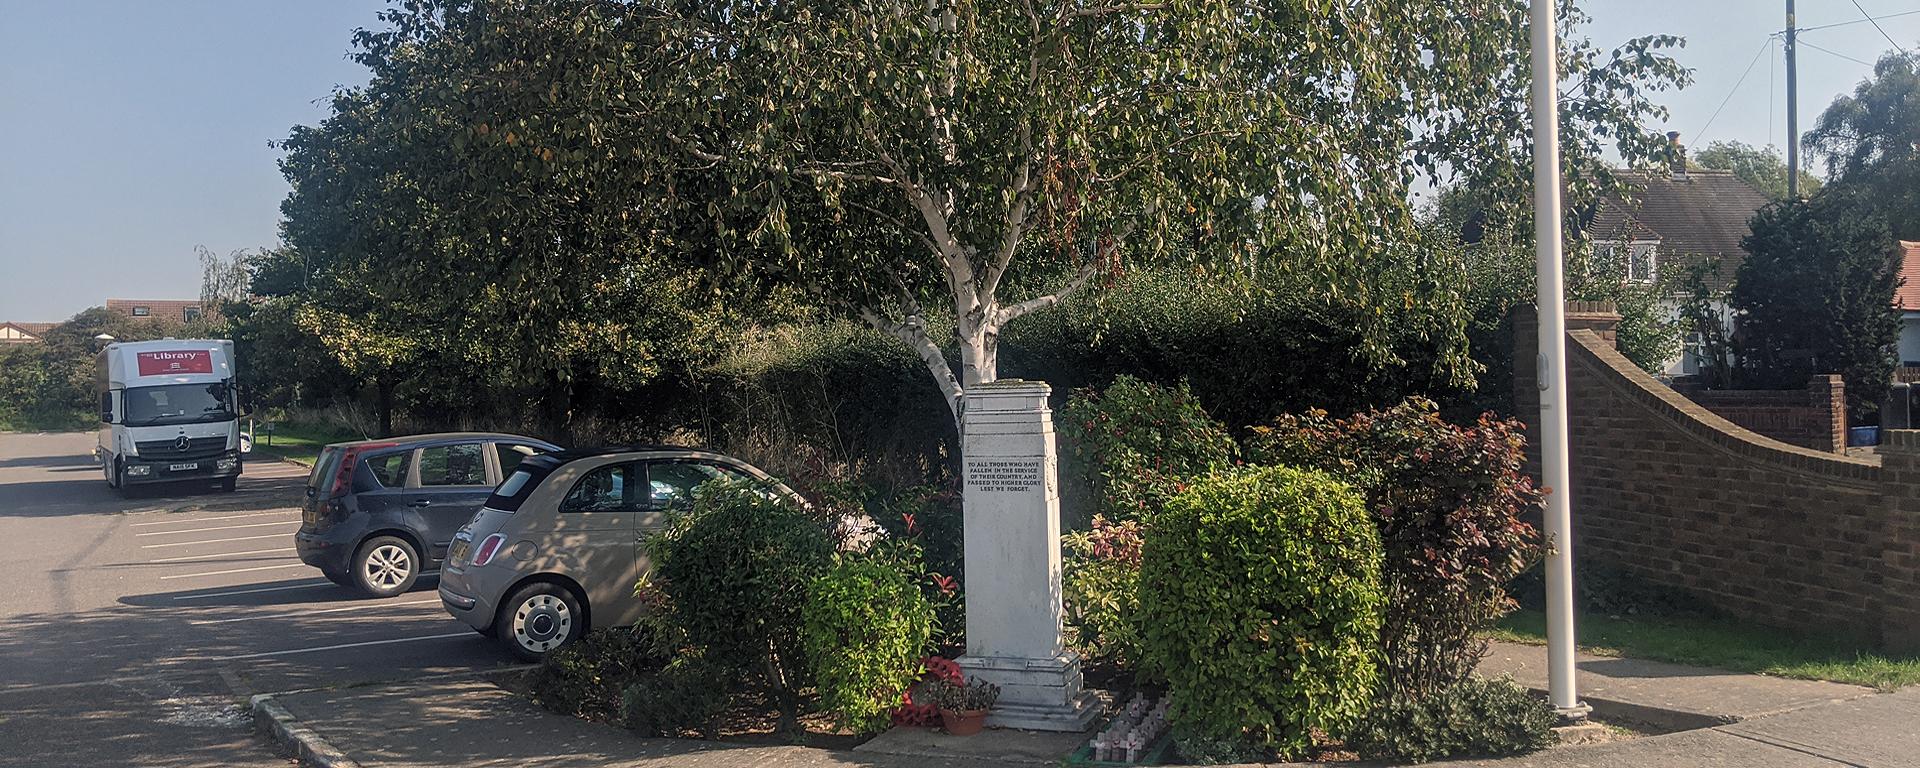 War Memorial in Abridge Village Hall Car Park